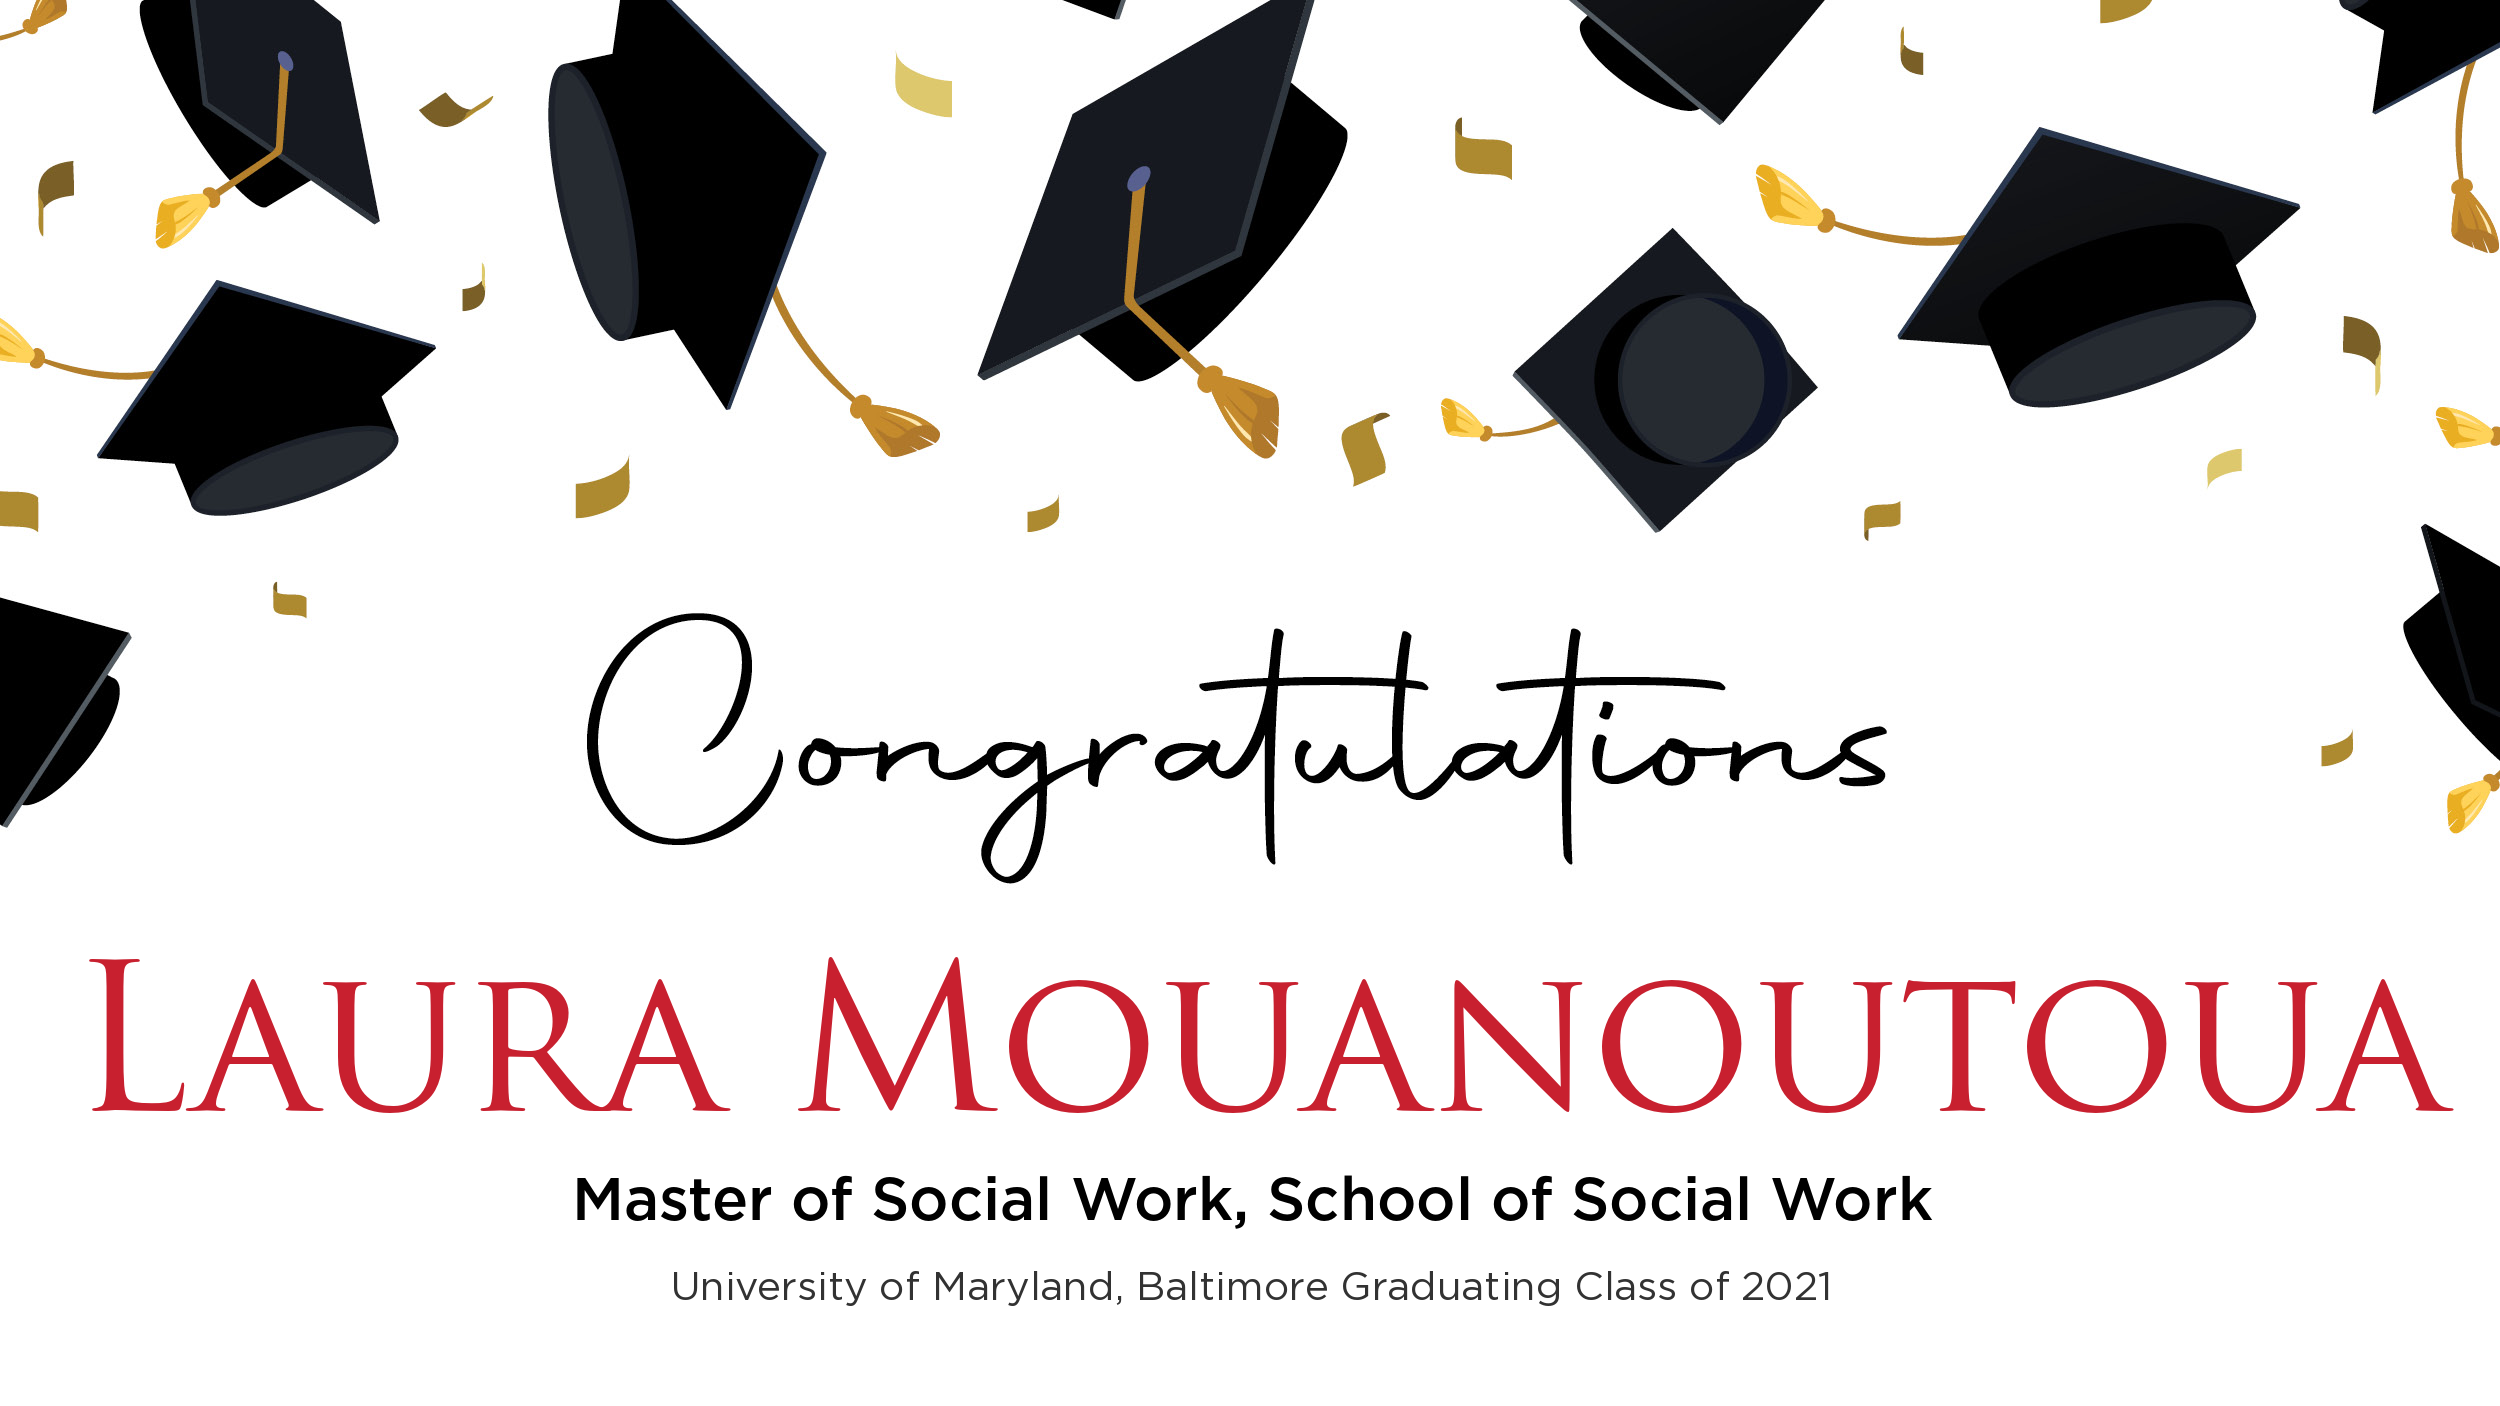 Congratulations Laura Mouanoutoua, Master of Social Work